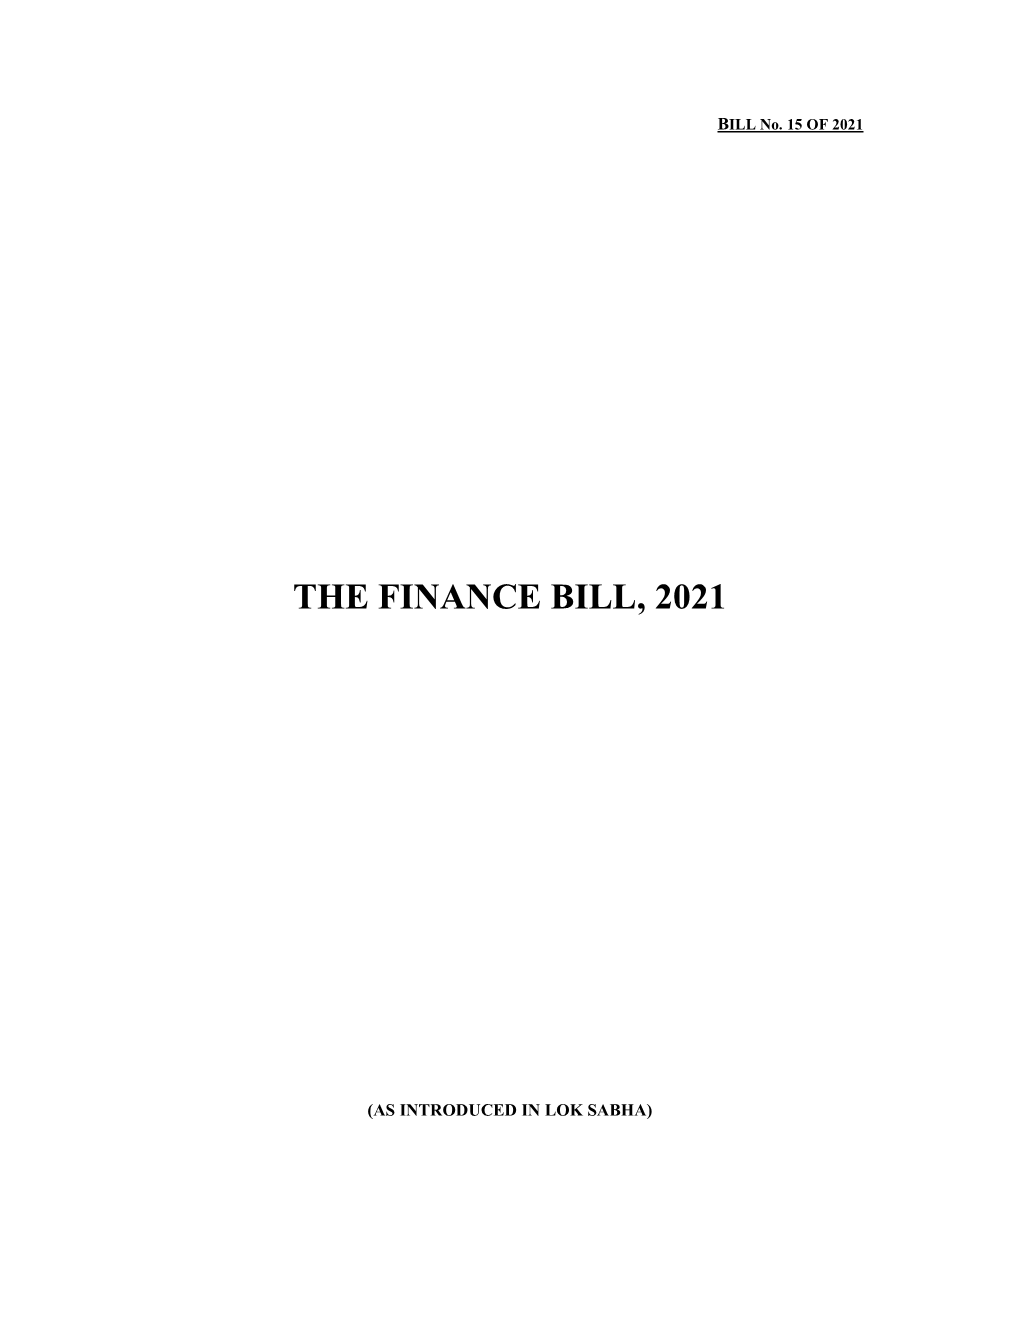 The Finance Bill, 2021